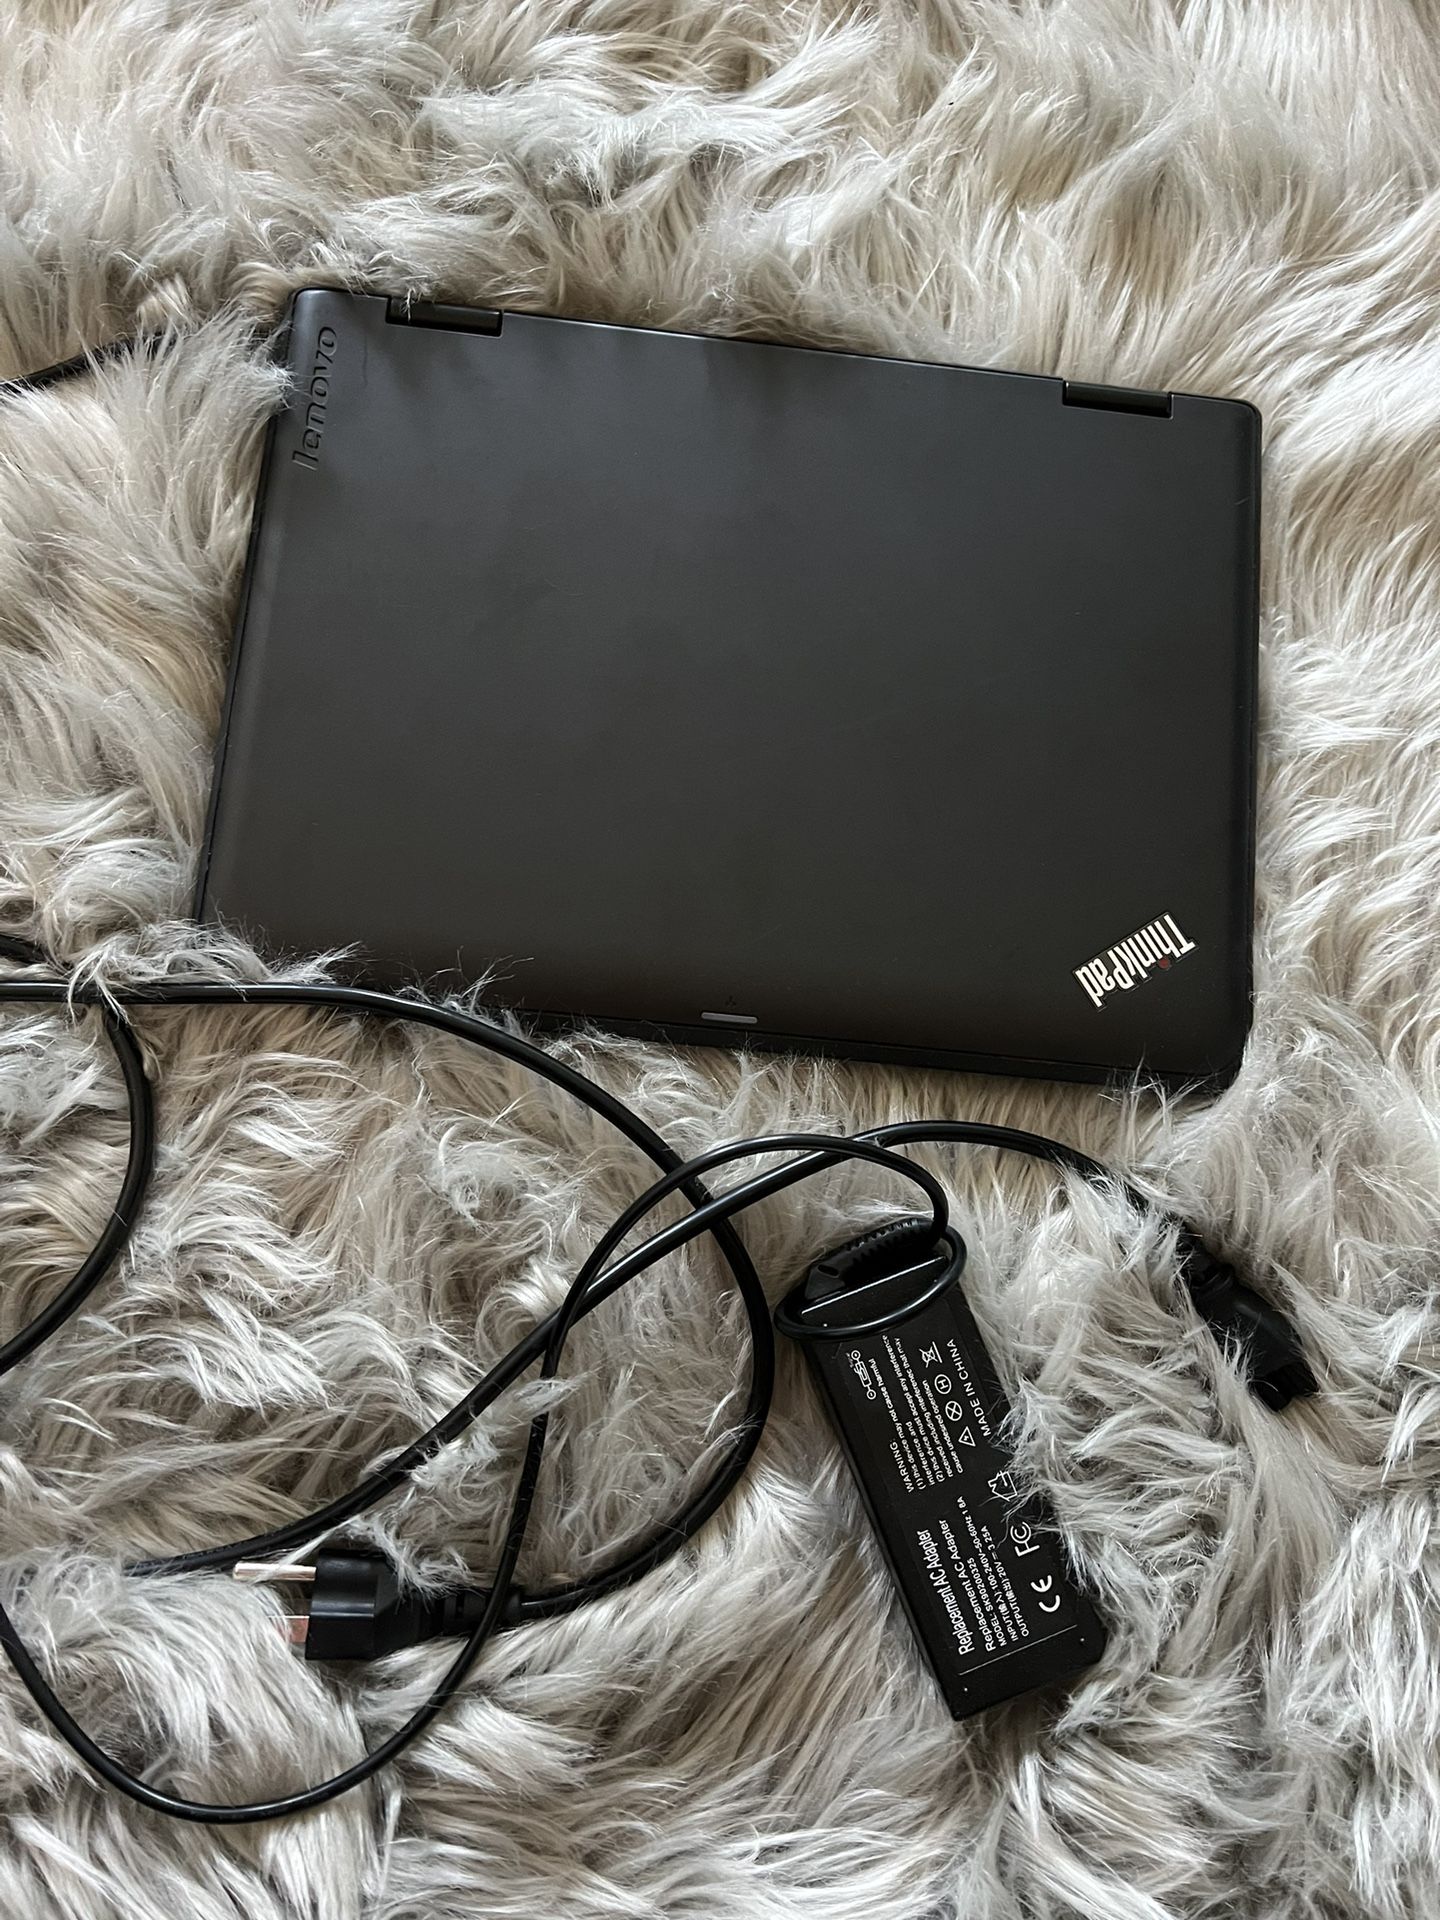 Lenovo ThinkPad Yoga 11e laptop